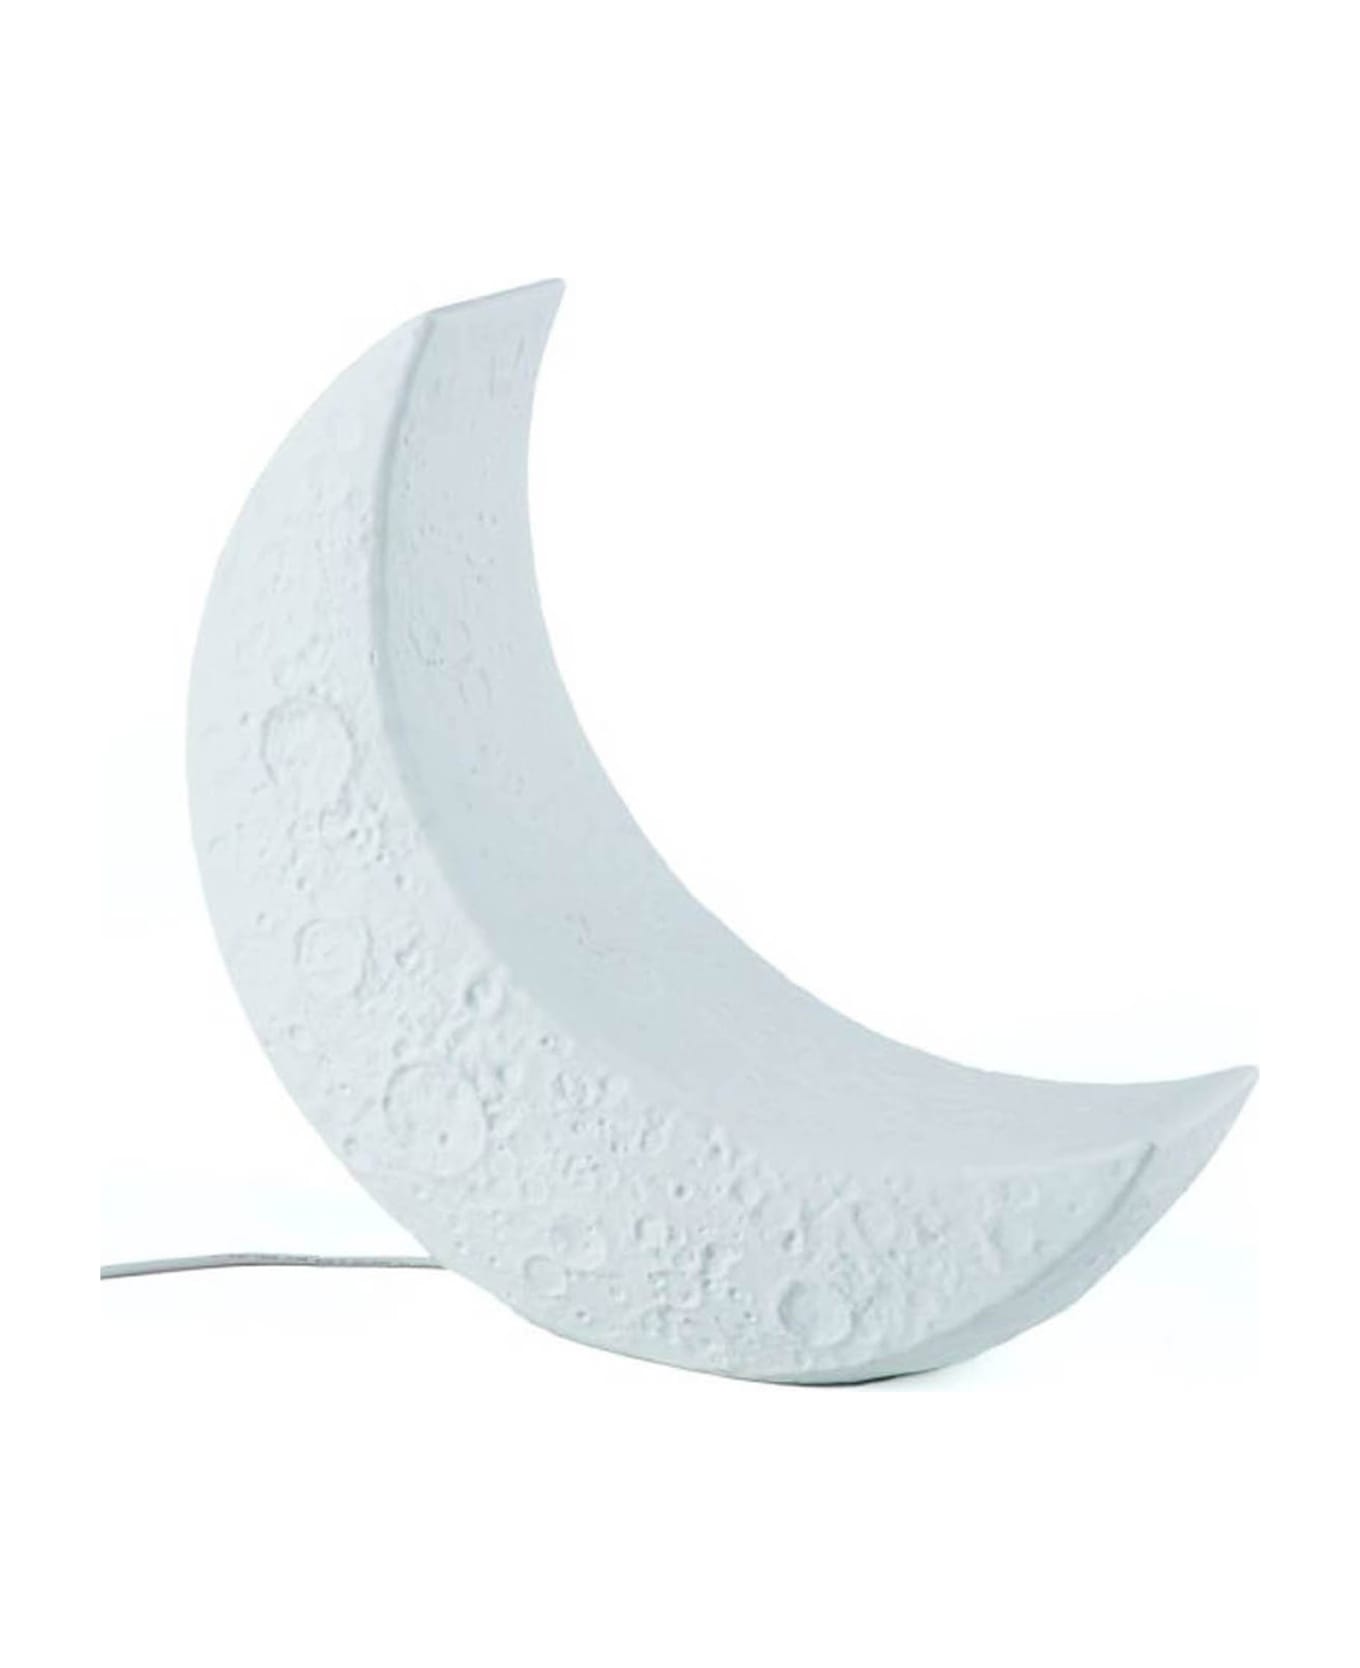 Seletti X Marcantonio 'my Tiny Moon' Lamp - White